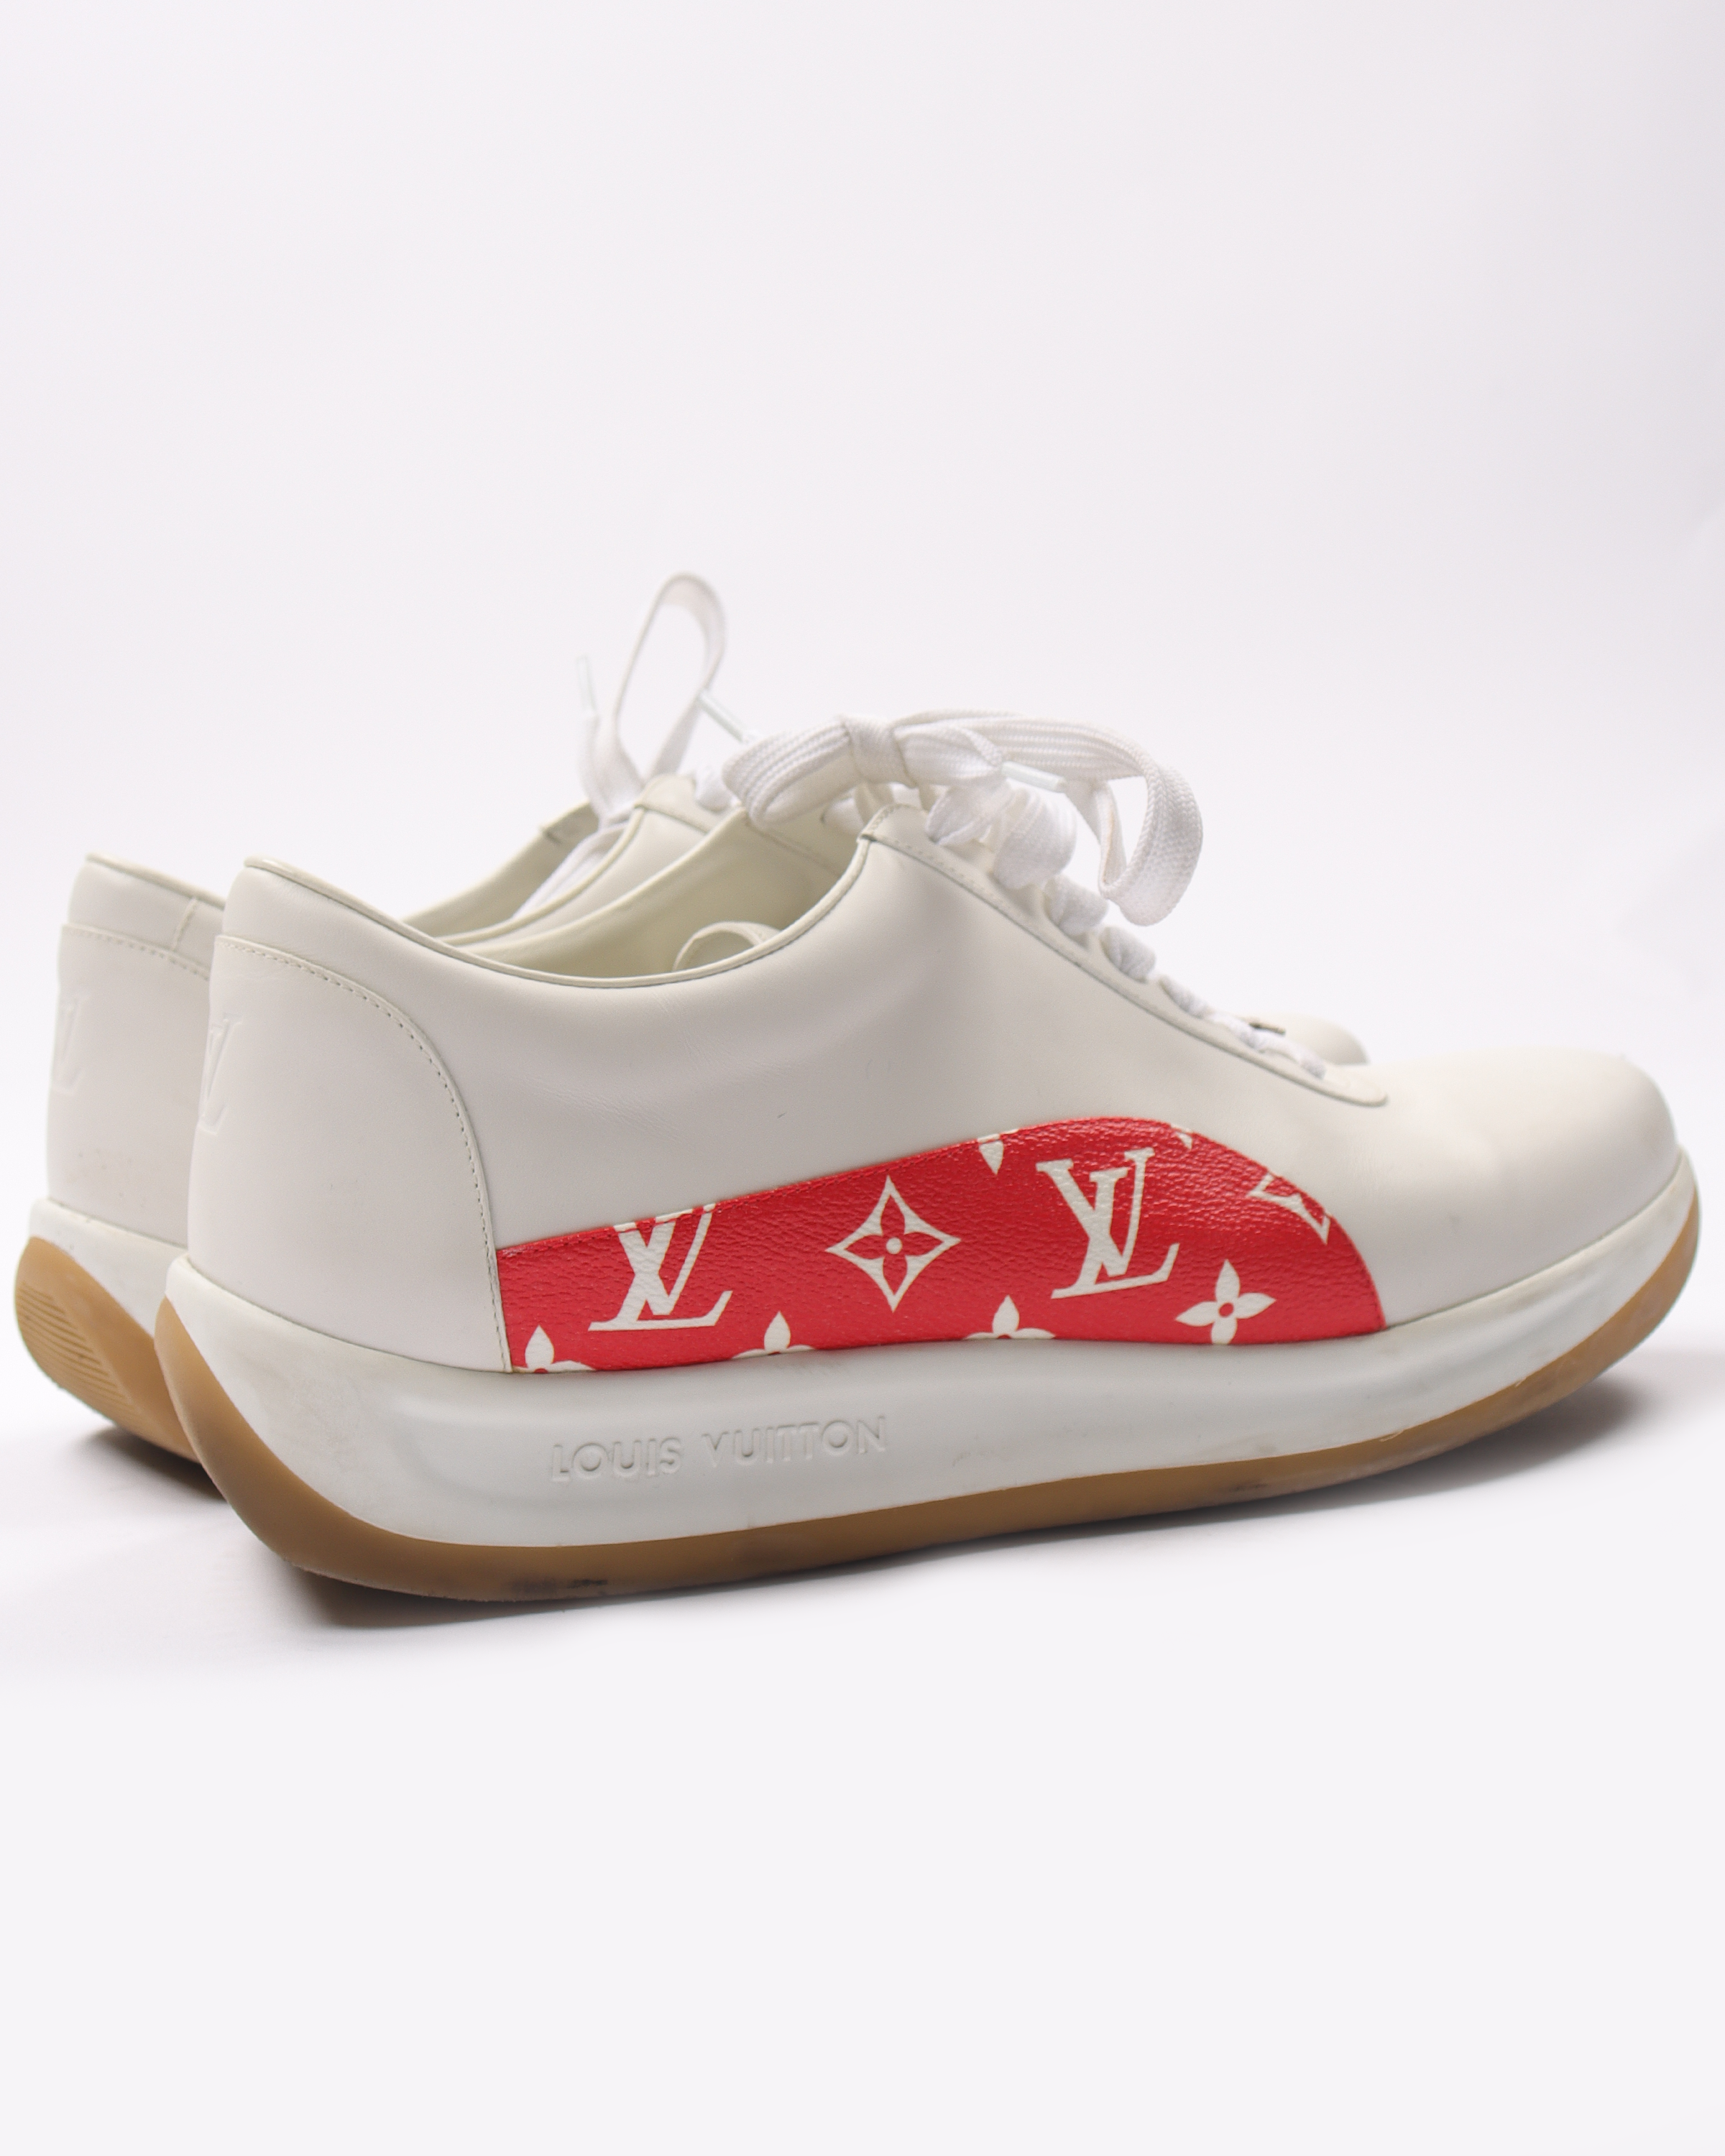 Supreme X Louis Vuitton Sport Sneaker 'Monogram Red' - Louis